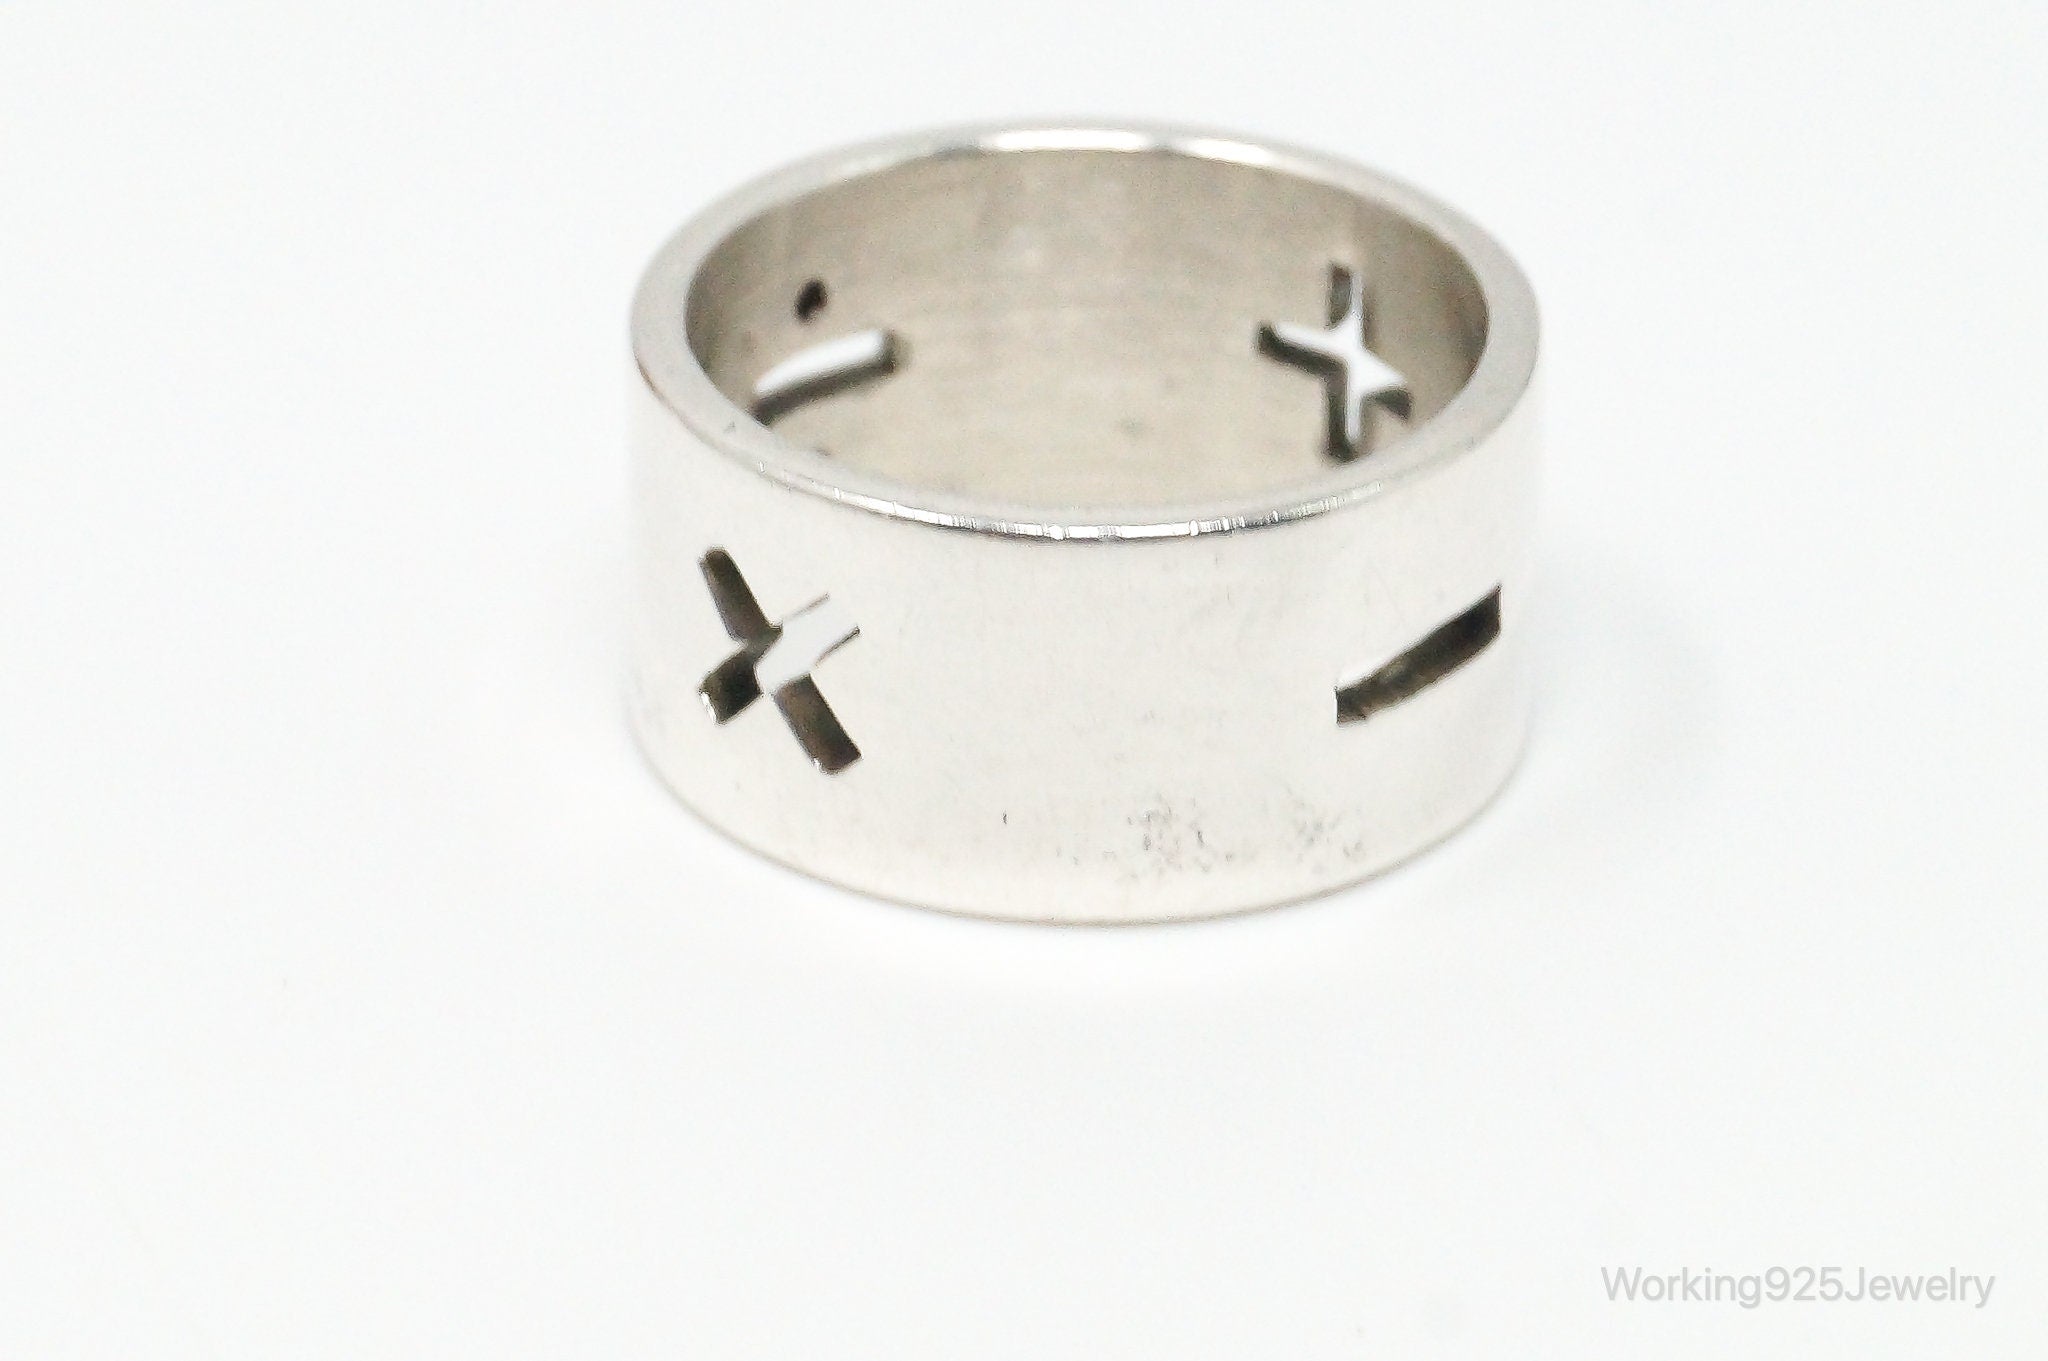 Sleek Modern Basic Mathematical Symbols Sterling Silver Band Ring - Size 8.25